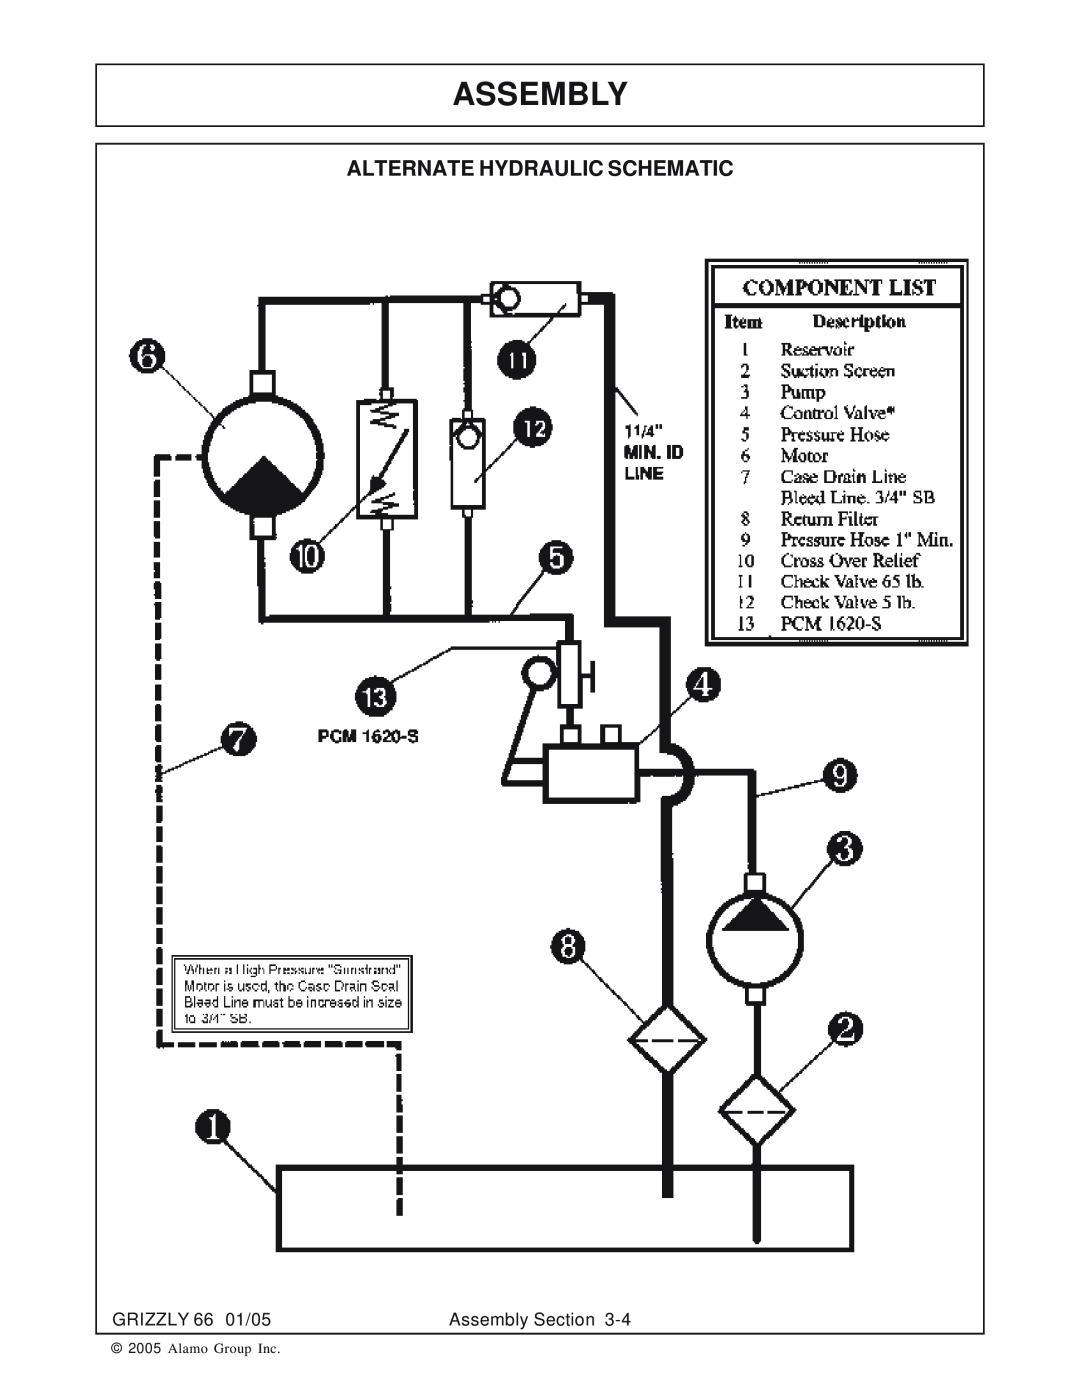 Alamo 66 manual Assembly, Alternate Hydraulic Schematic, Alamo Group Inc 